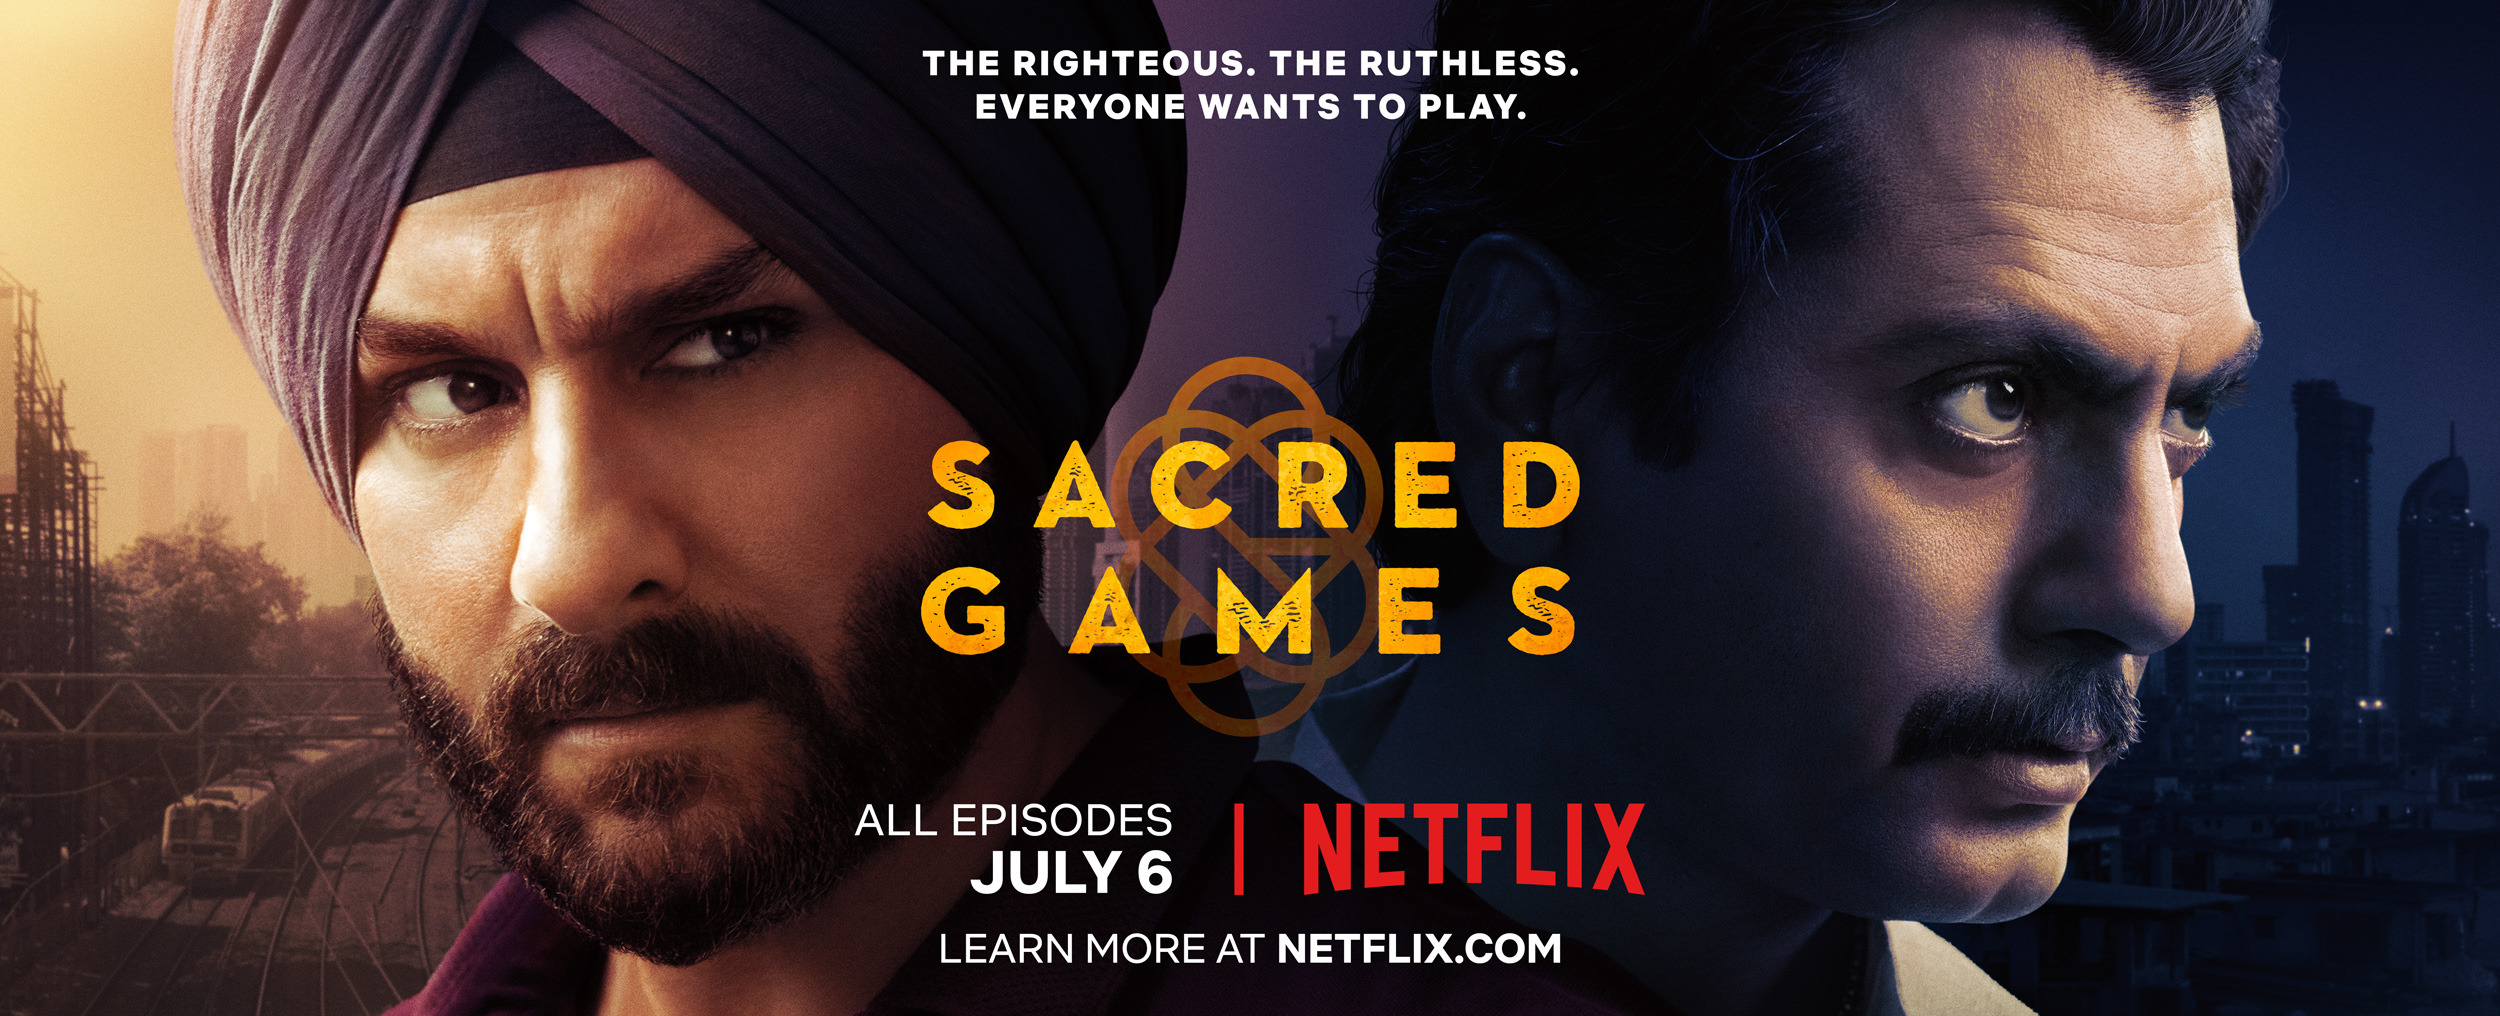 Mega Sized TV Poster Image for Sacred Games (#15 of 20)